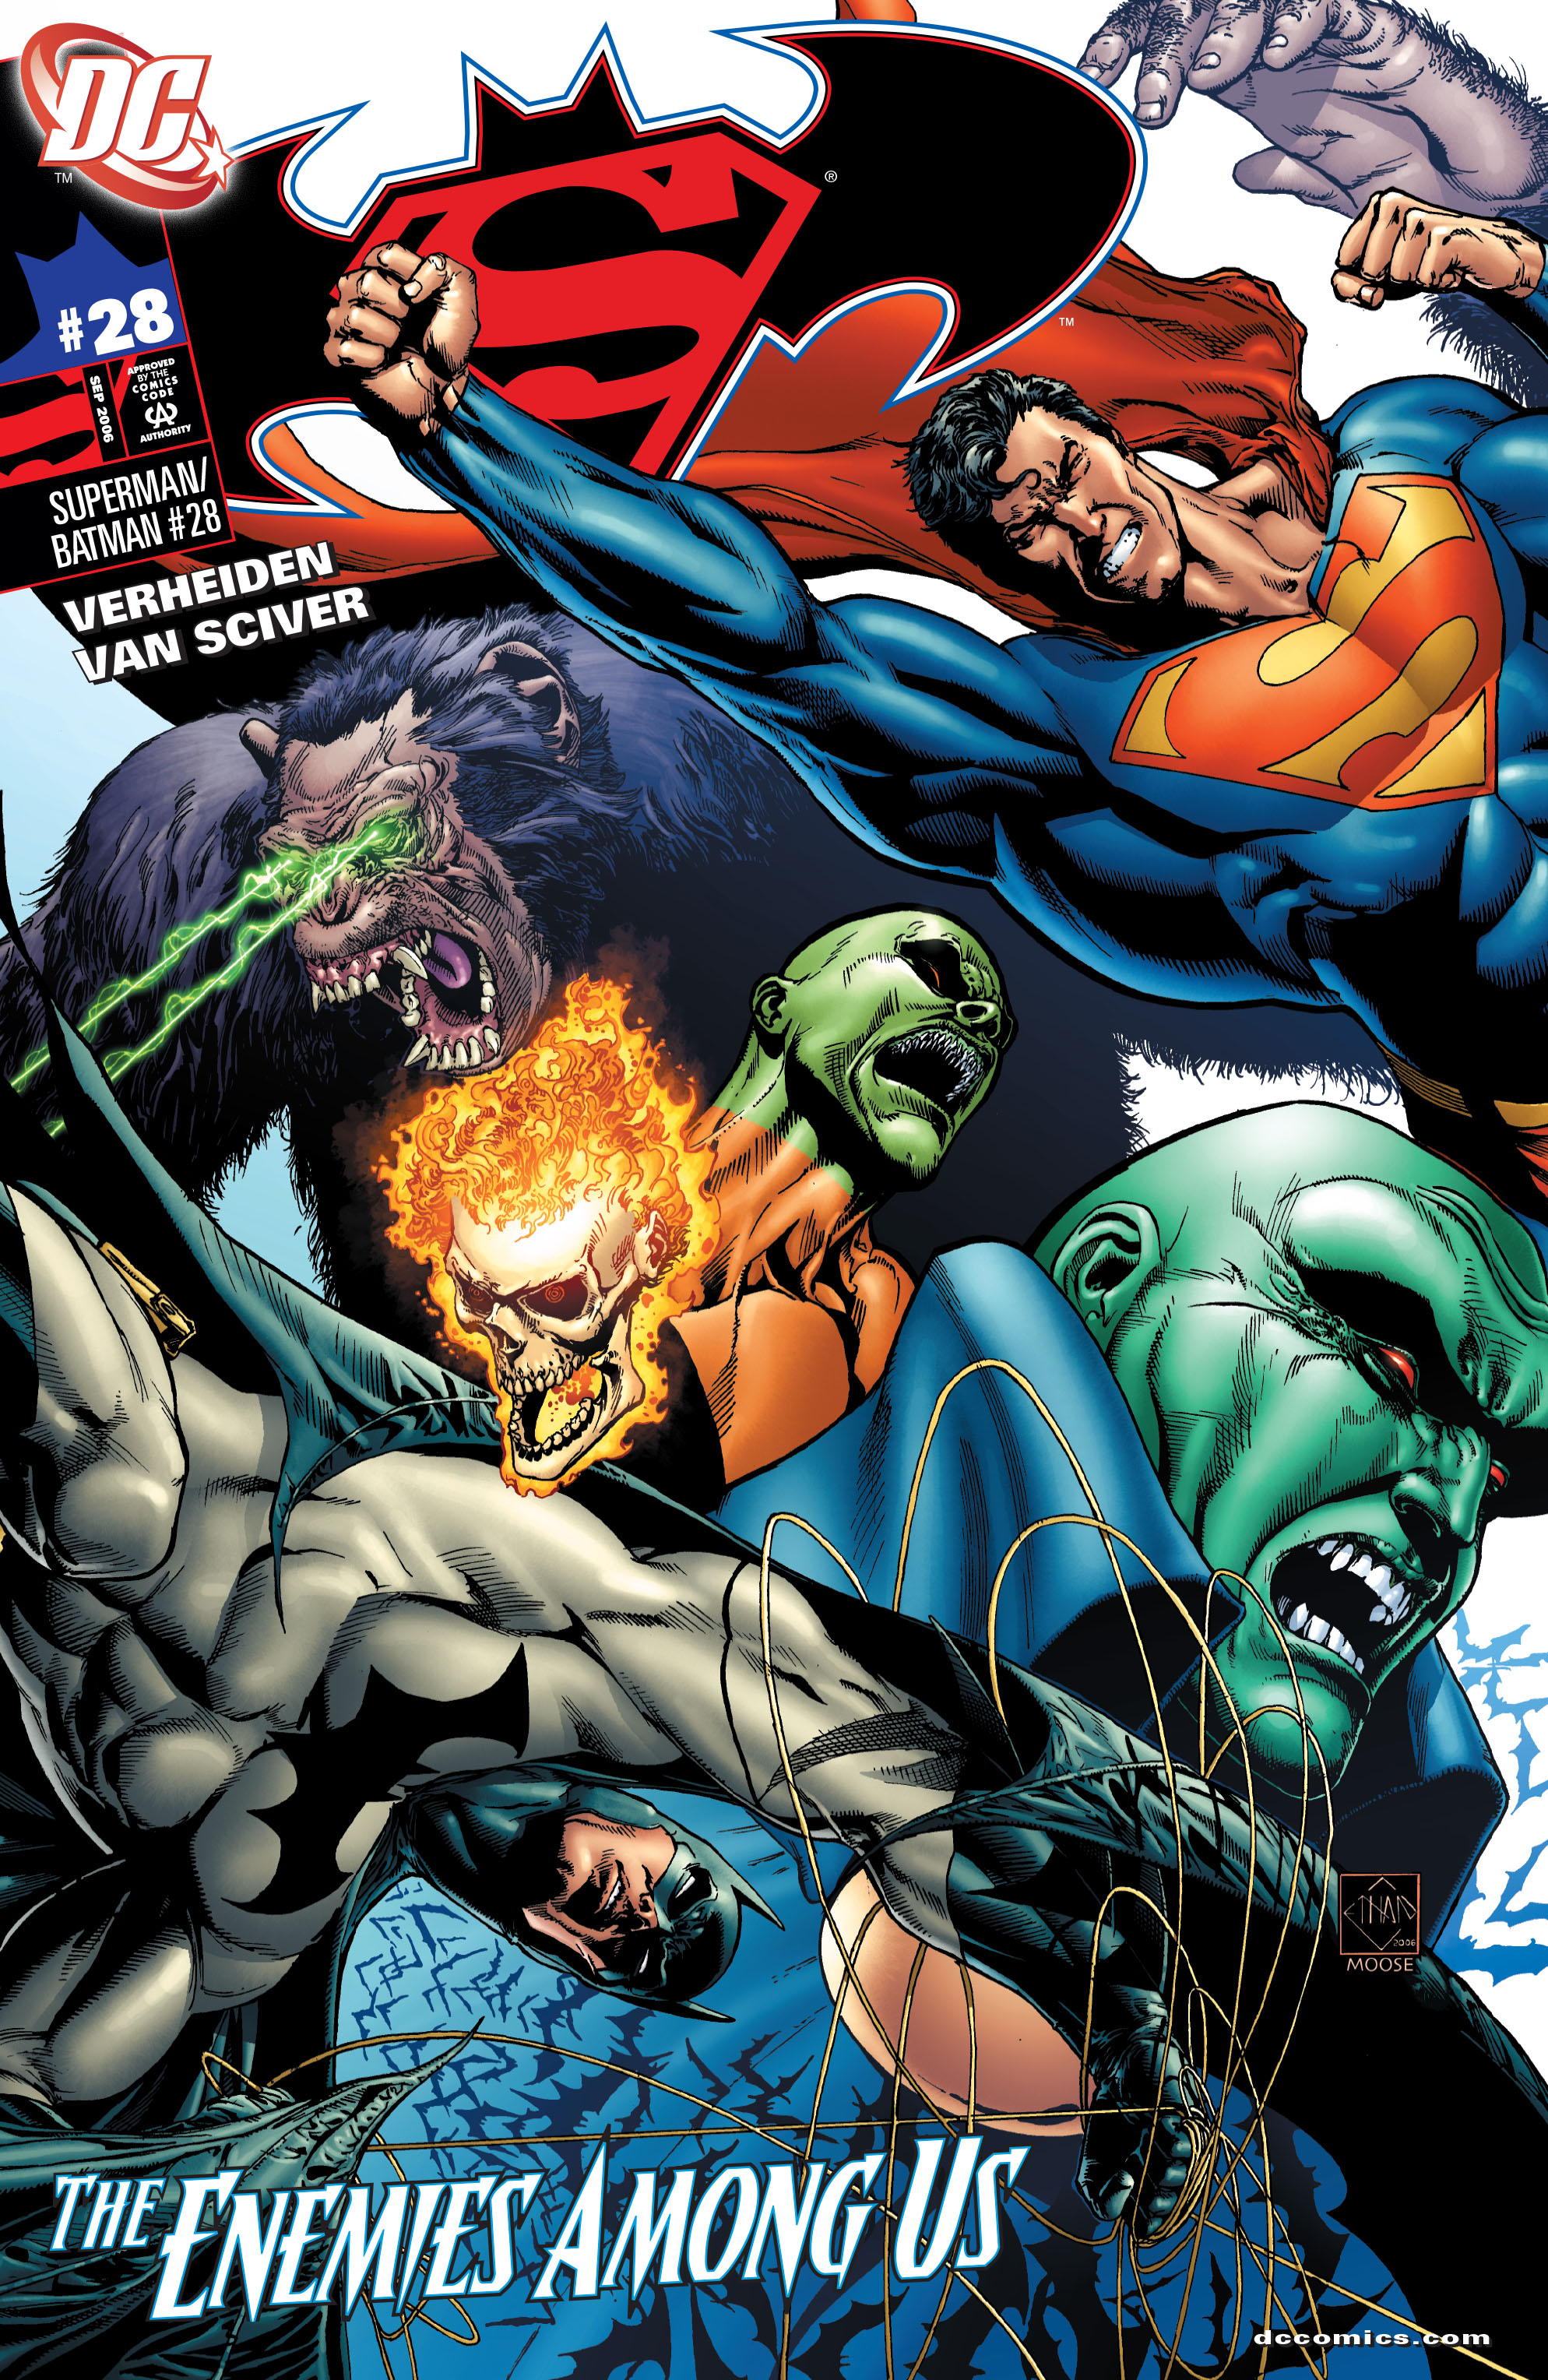 Superman Batman Issue 28 | Read Superman Batman Issue 28 comic online in  high quality. Read Full Comic online for free - Read comics online in high  quality .|